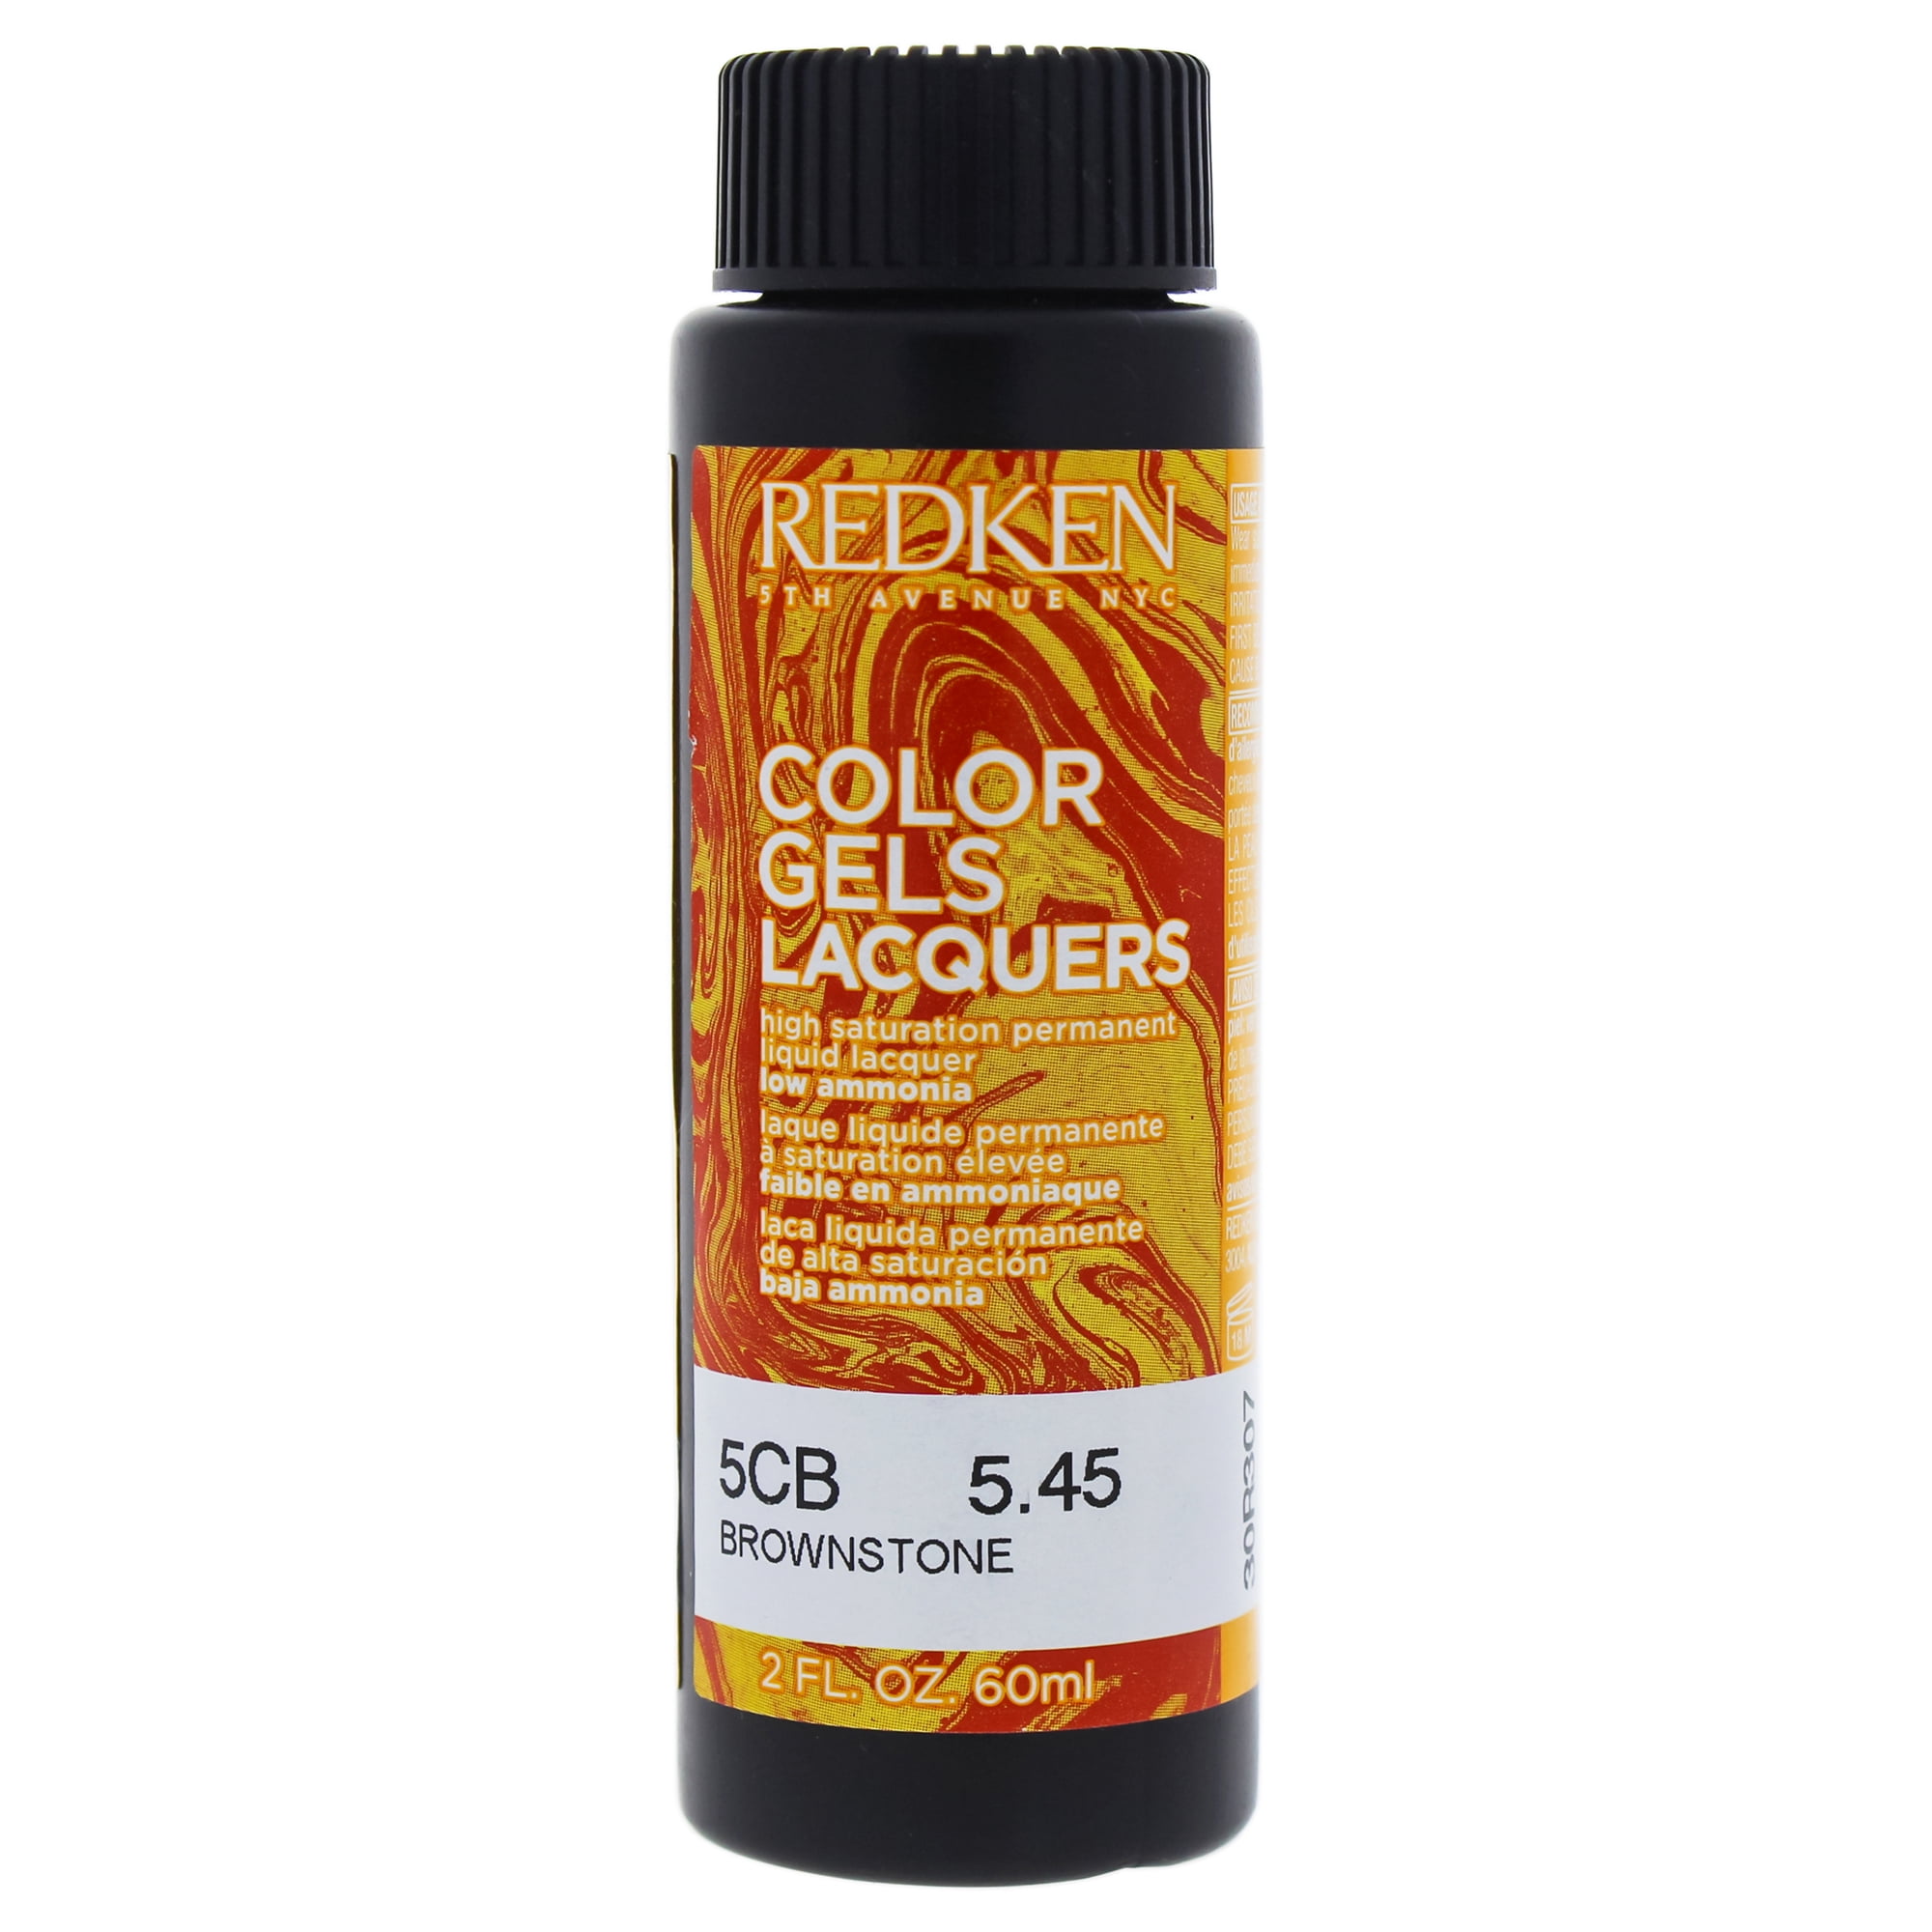 Color Gels Lacquers Haircolor - 5CB Brownstone - Walmart.com.